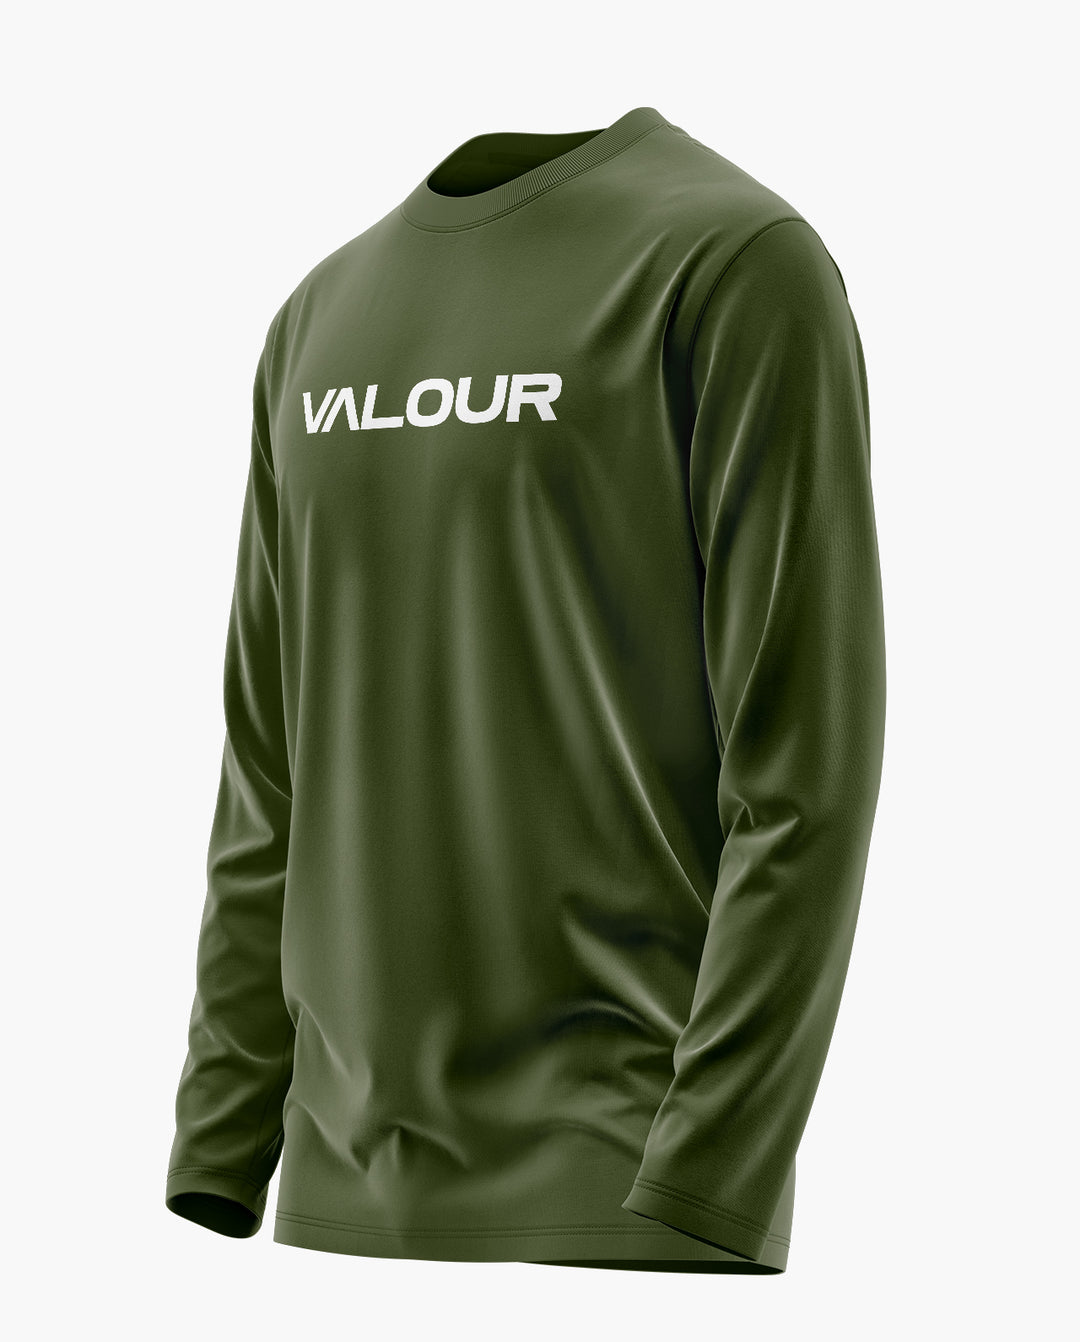 AERO VALOUR Full Sleeve T-Shirt